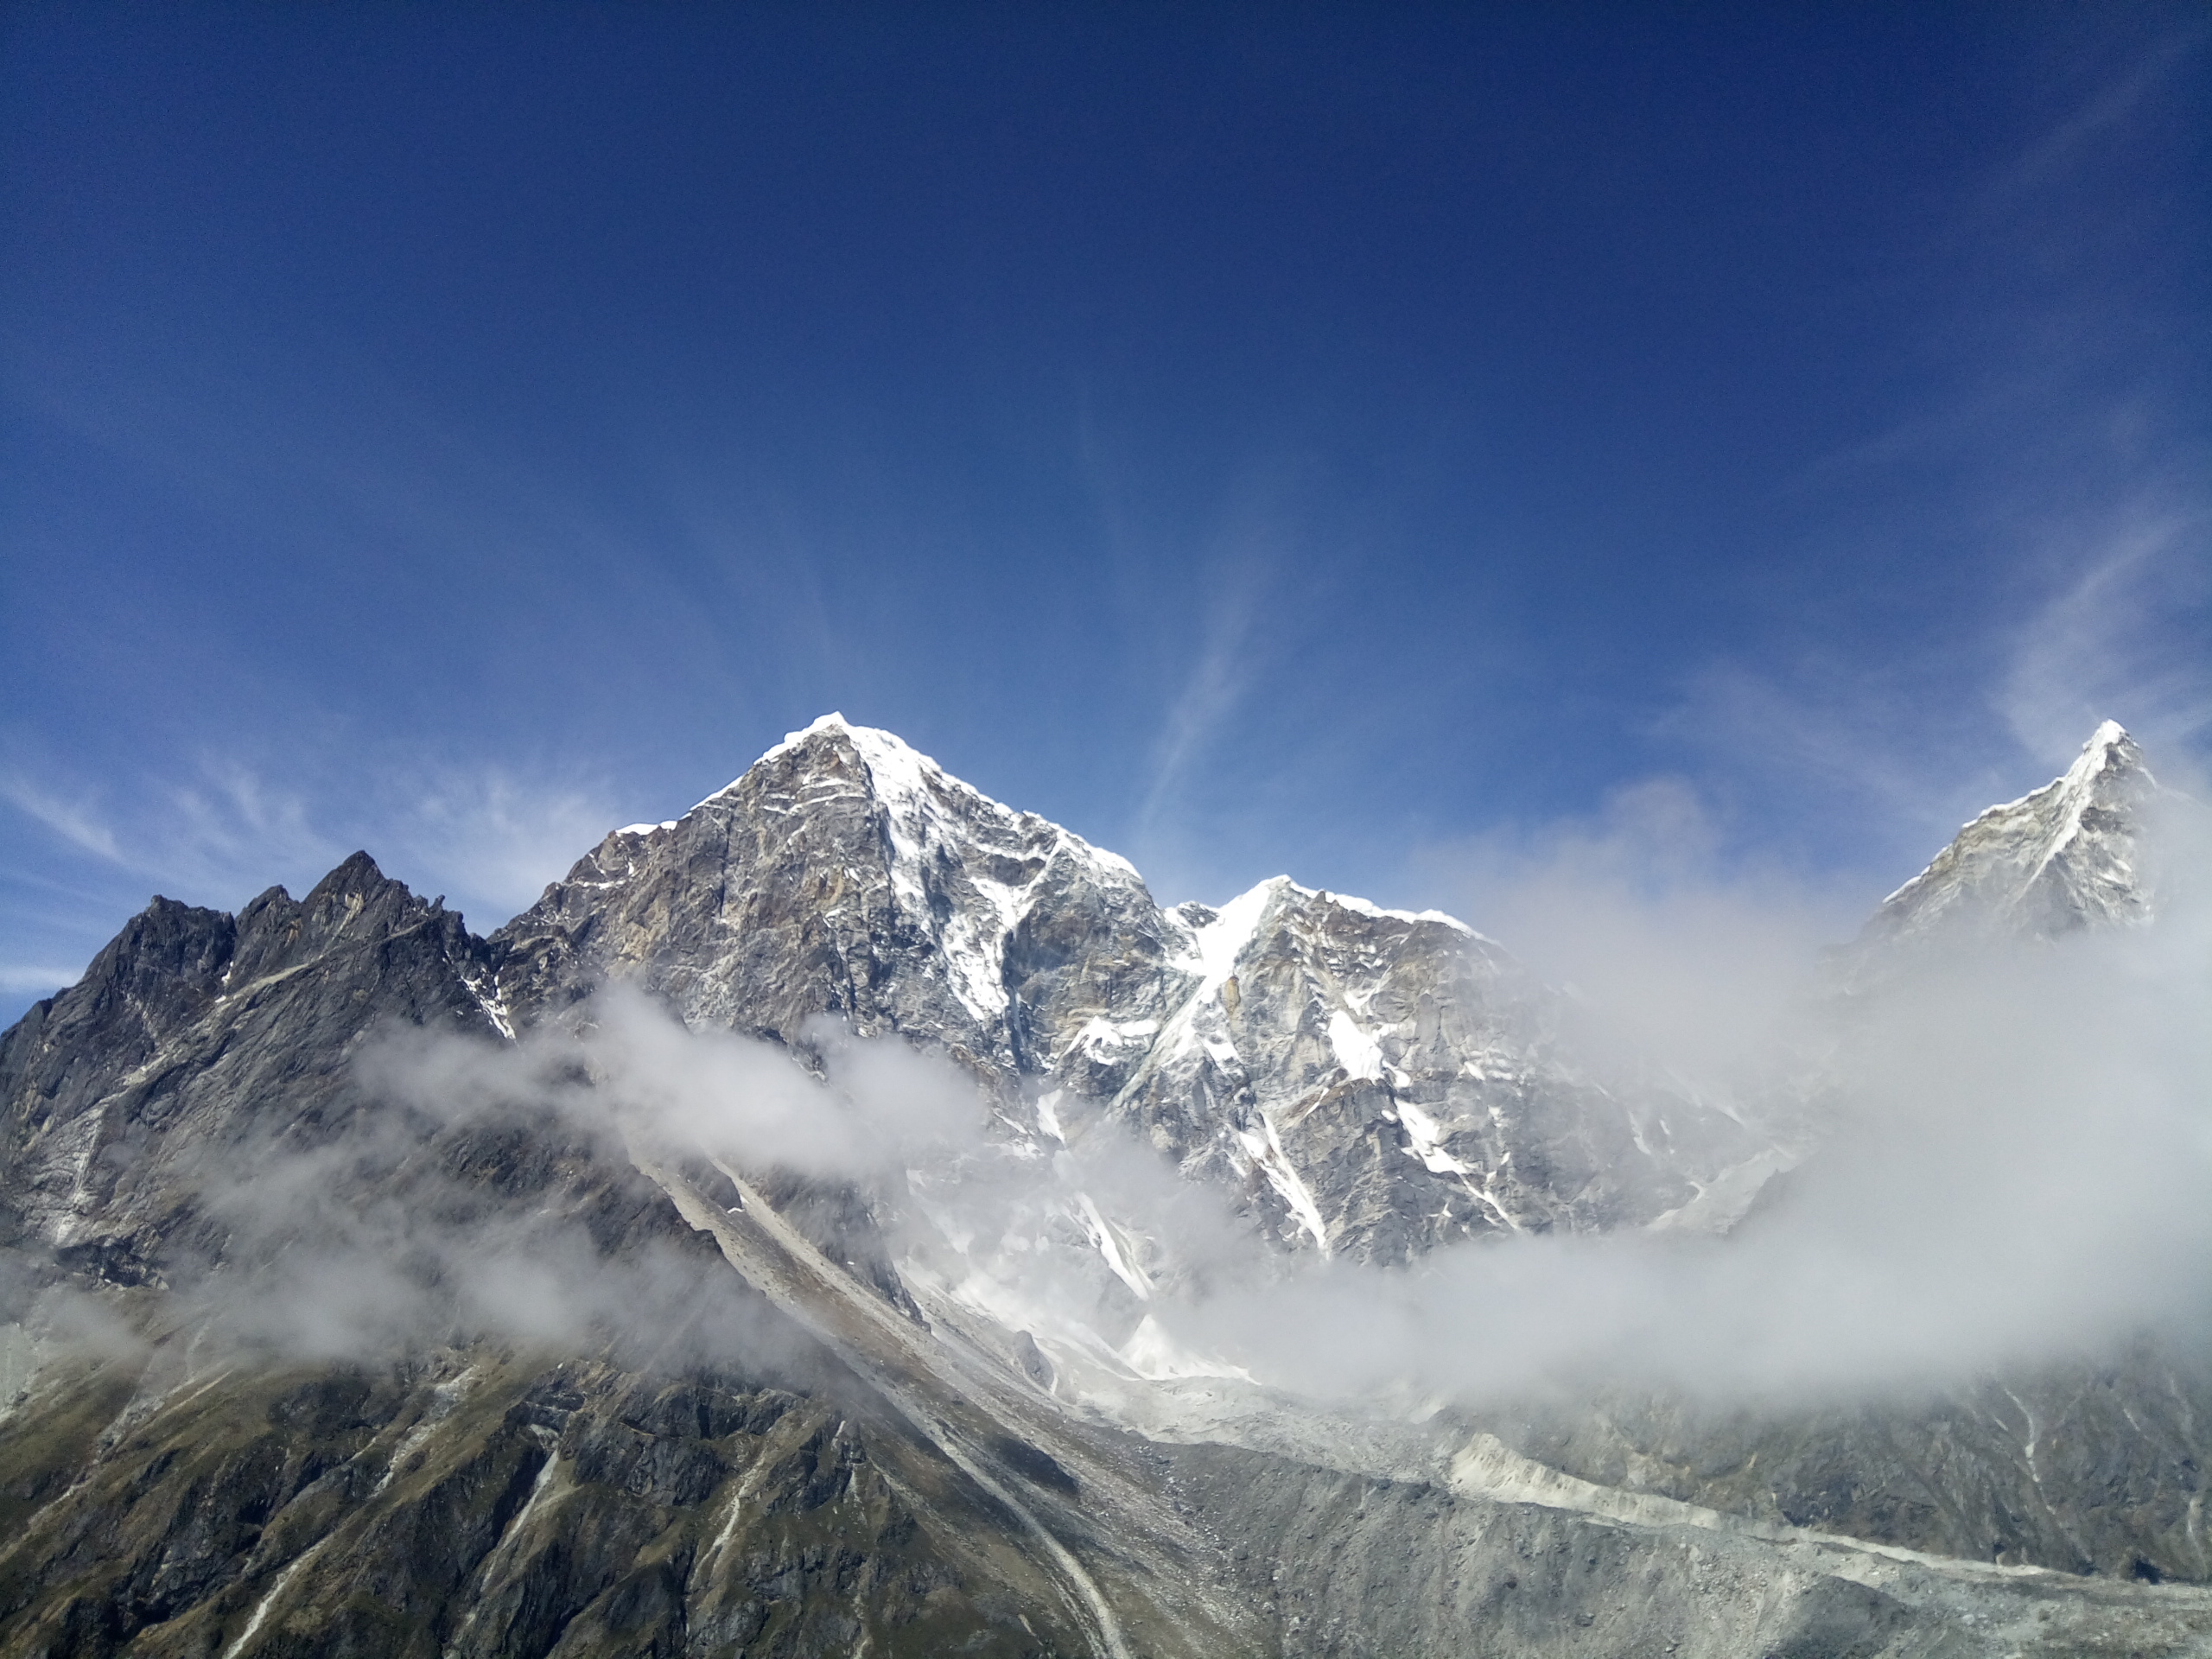 Himalaya, People, and Cultural